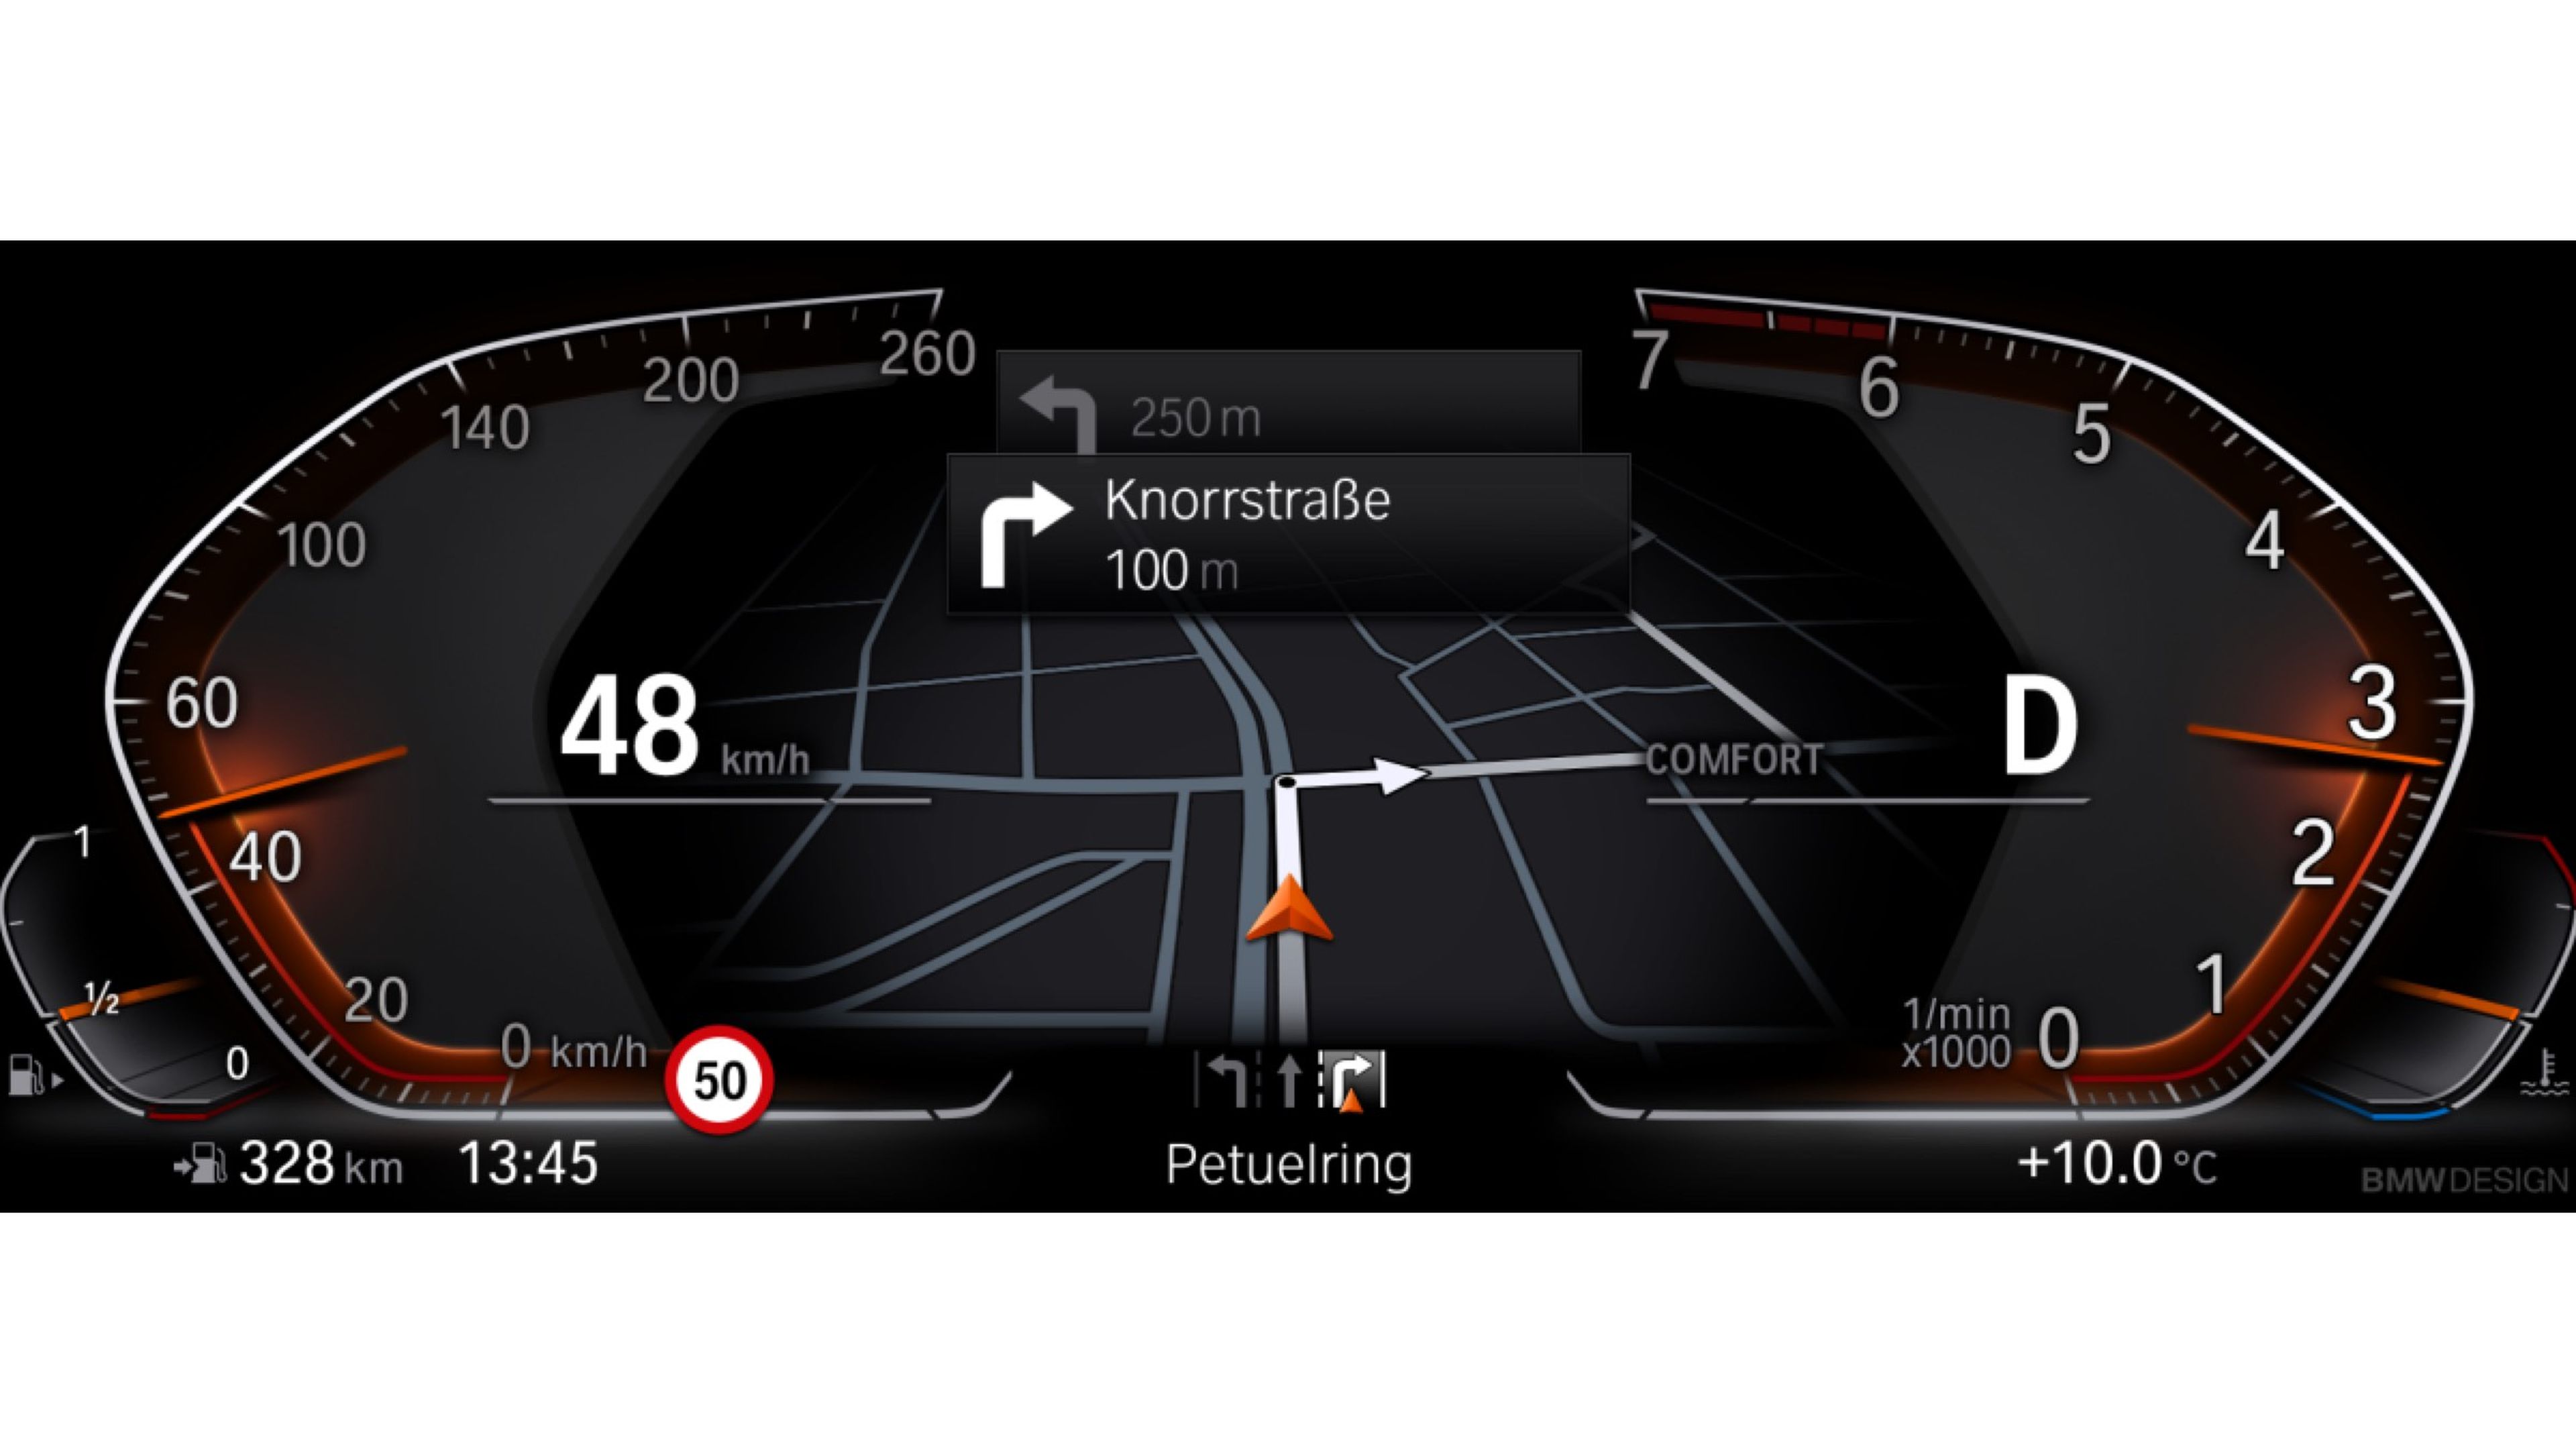 Nueva interfaz BMW Operating System 7.0